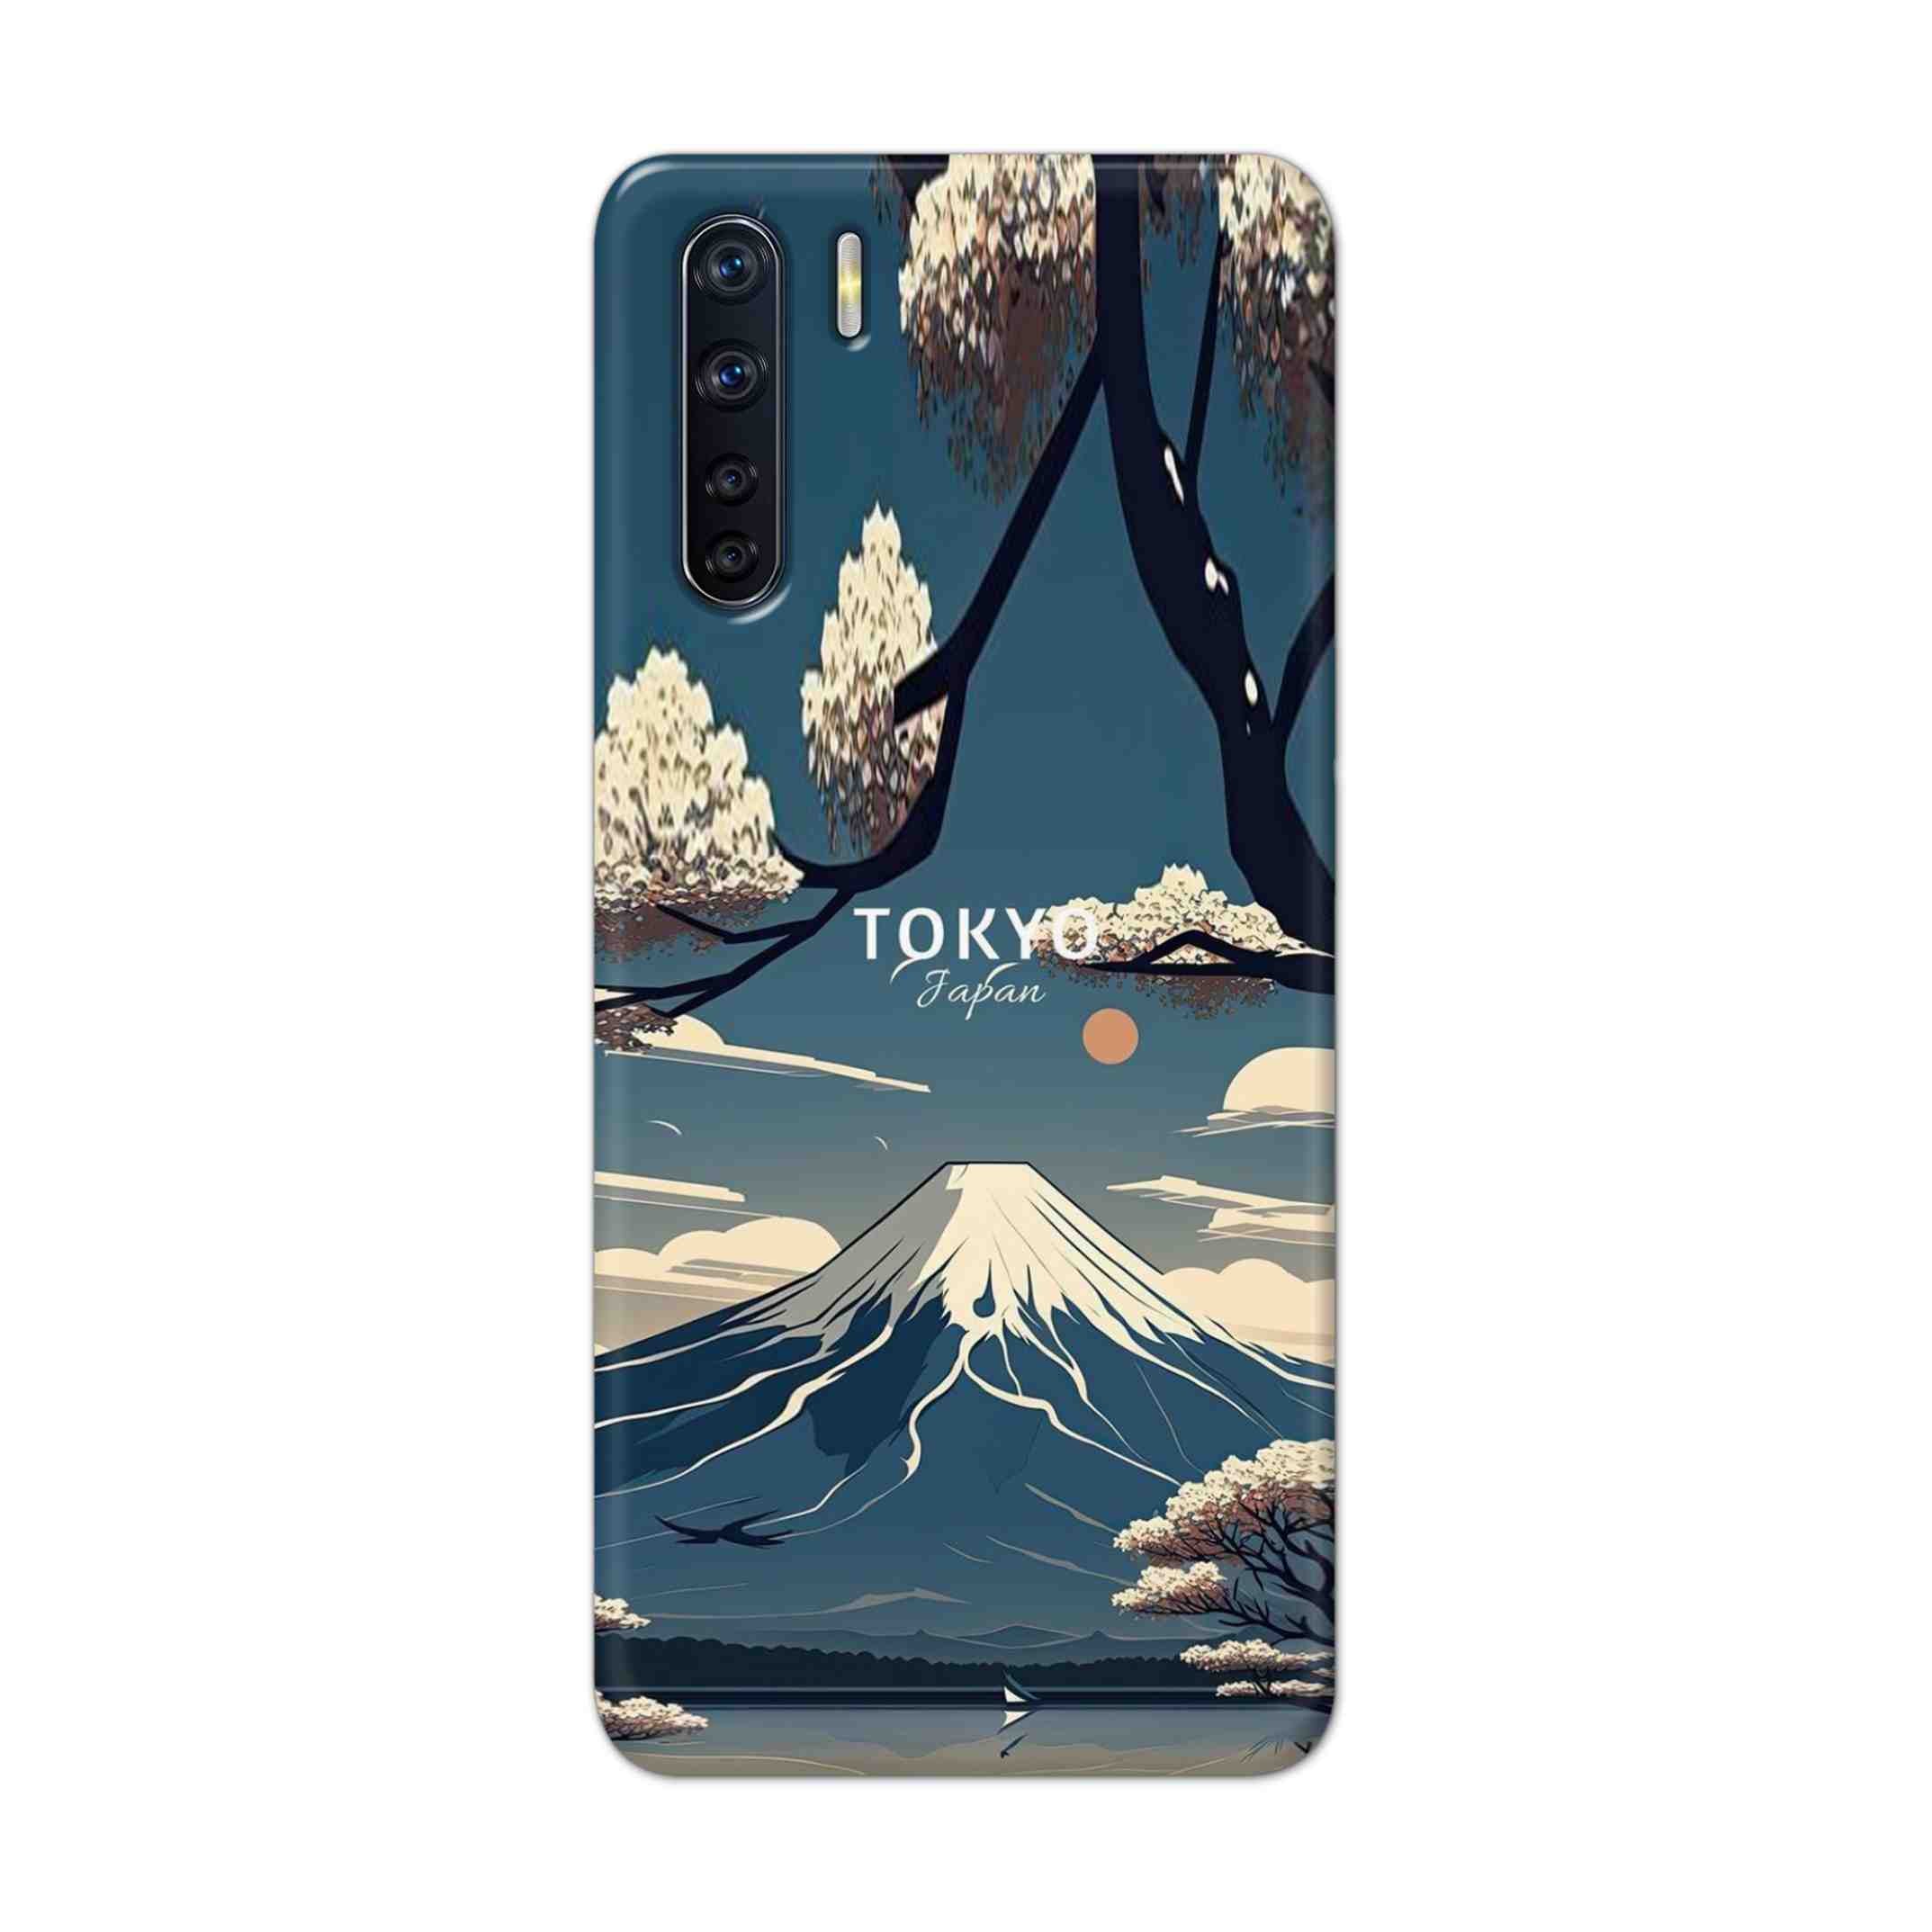 Buy Tokyo Hard Back Mobile Phone Case Cover For OPPO F15 Online